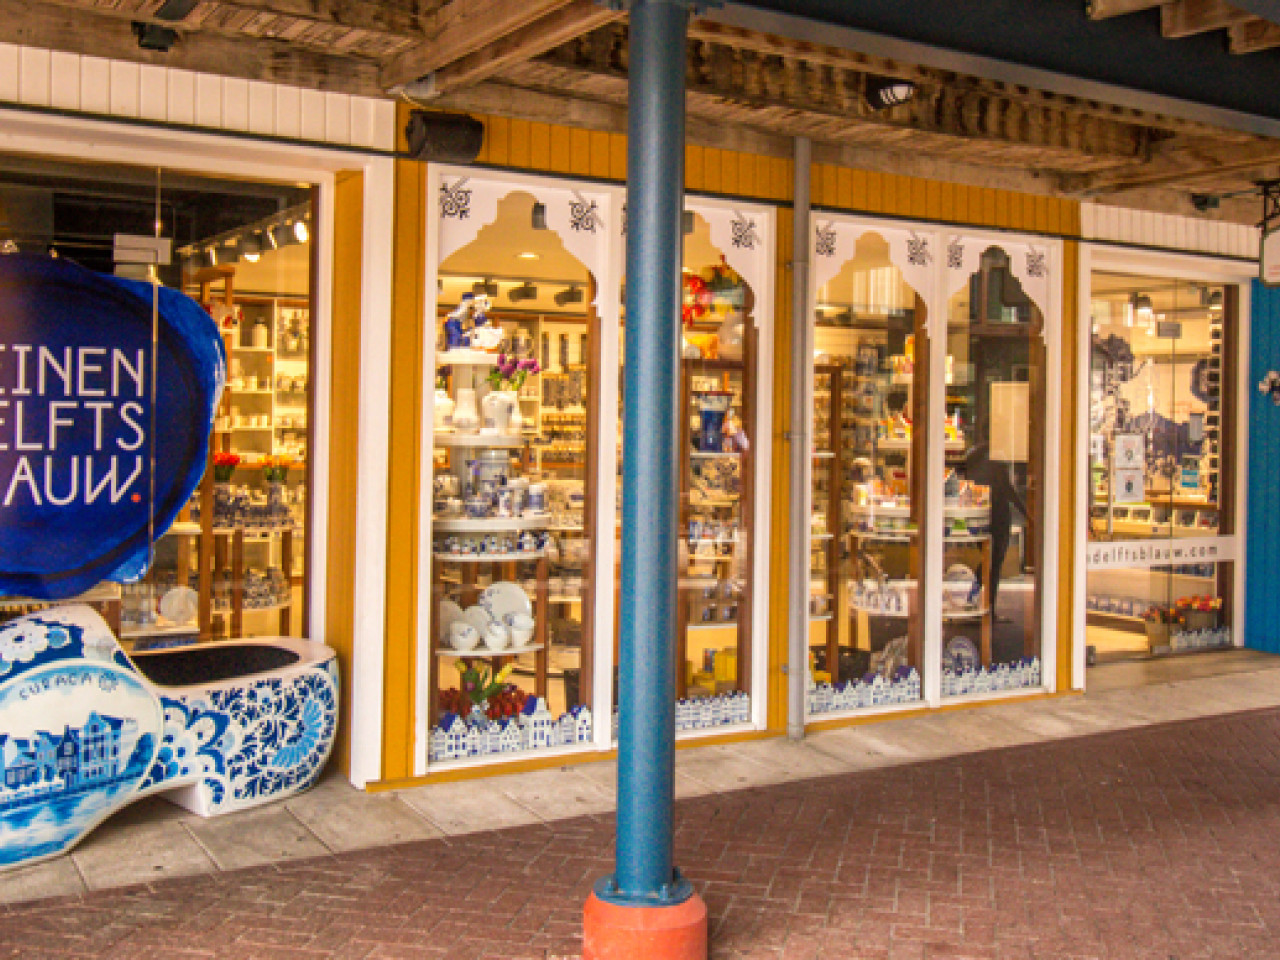 Heinen Delfts Blauw winkel op Curaçao Rif fort Willemstad grote klomp fotomoment